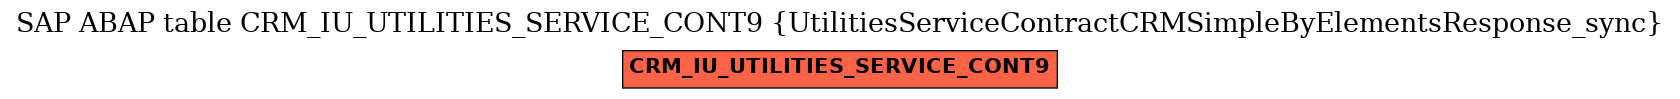 E-R Diagram for table CRM_IU_UTILITIES_SERVICE_CONT9 (UtilitiesServiceContractCRMSimpleByElementsResponse_sync)